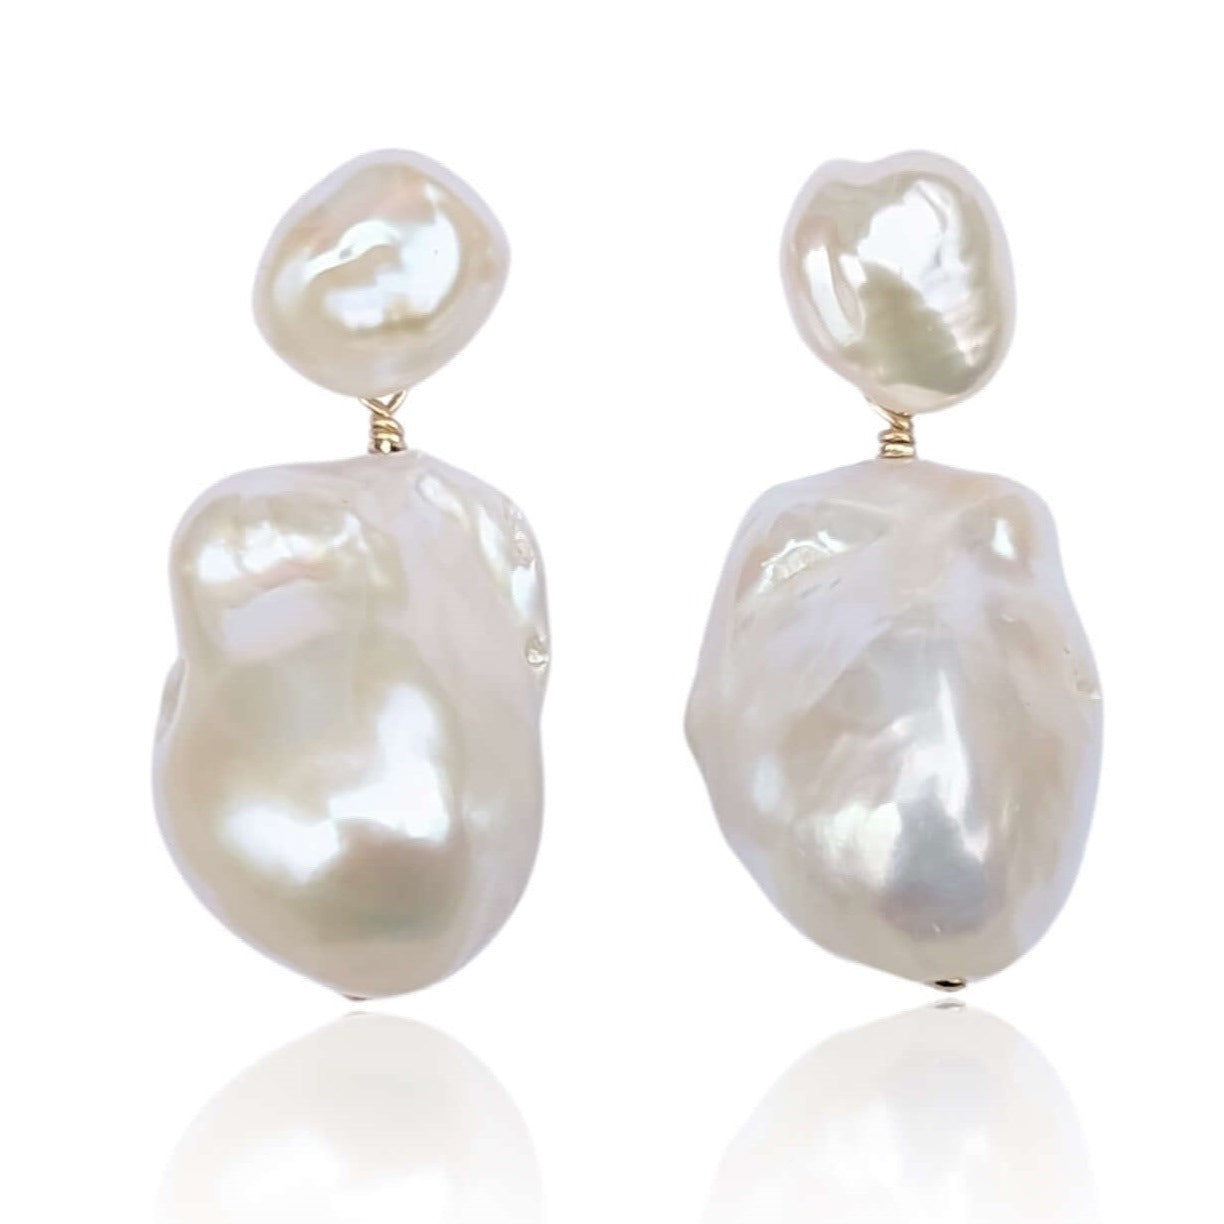 Large irregular pearl drop earrings with irregular pearl stud